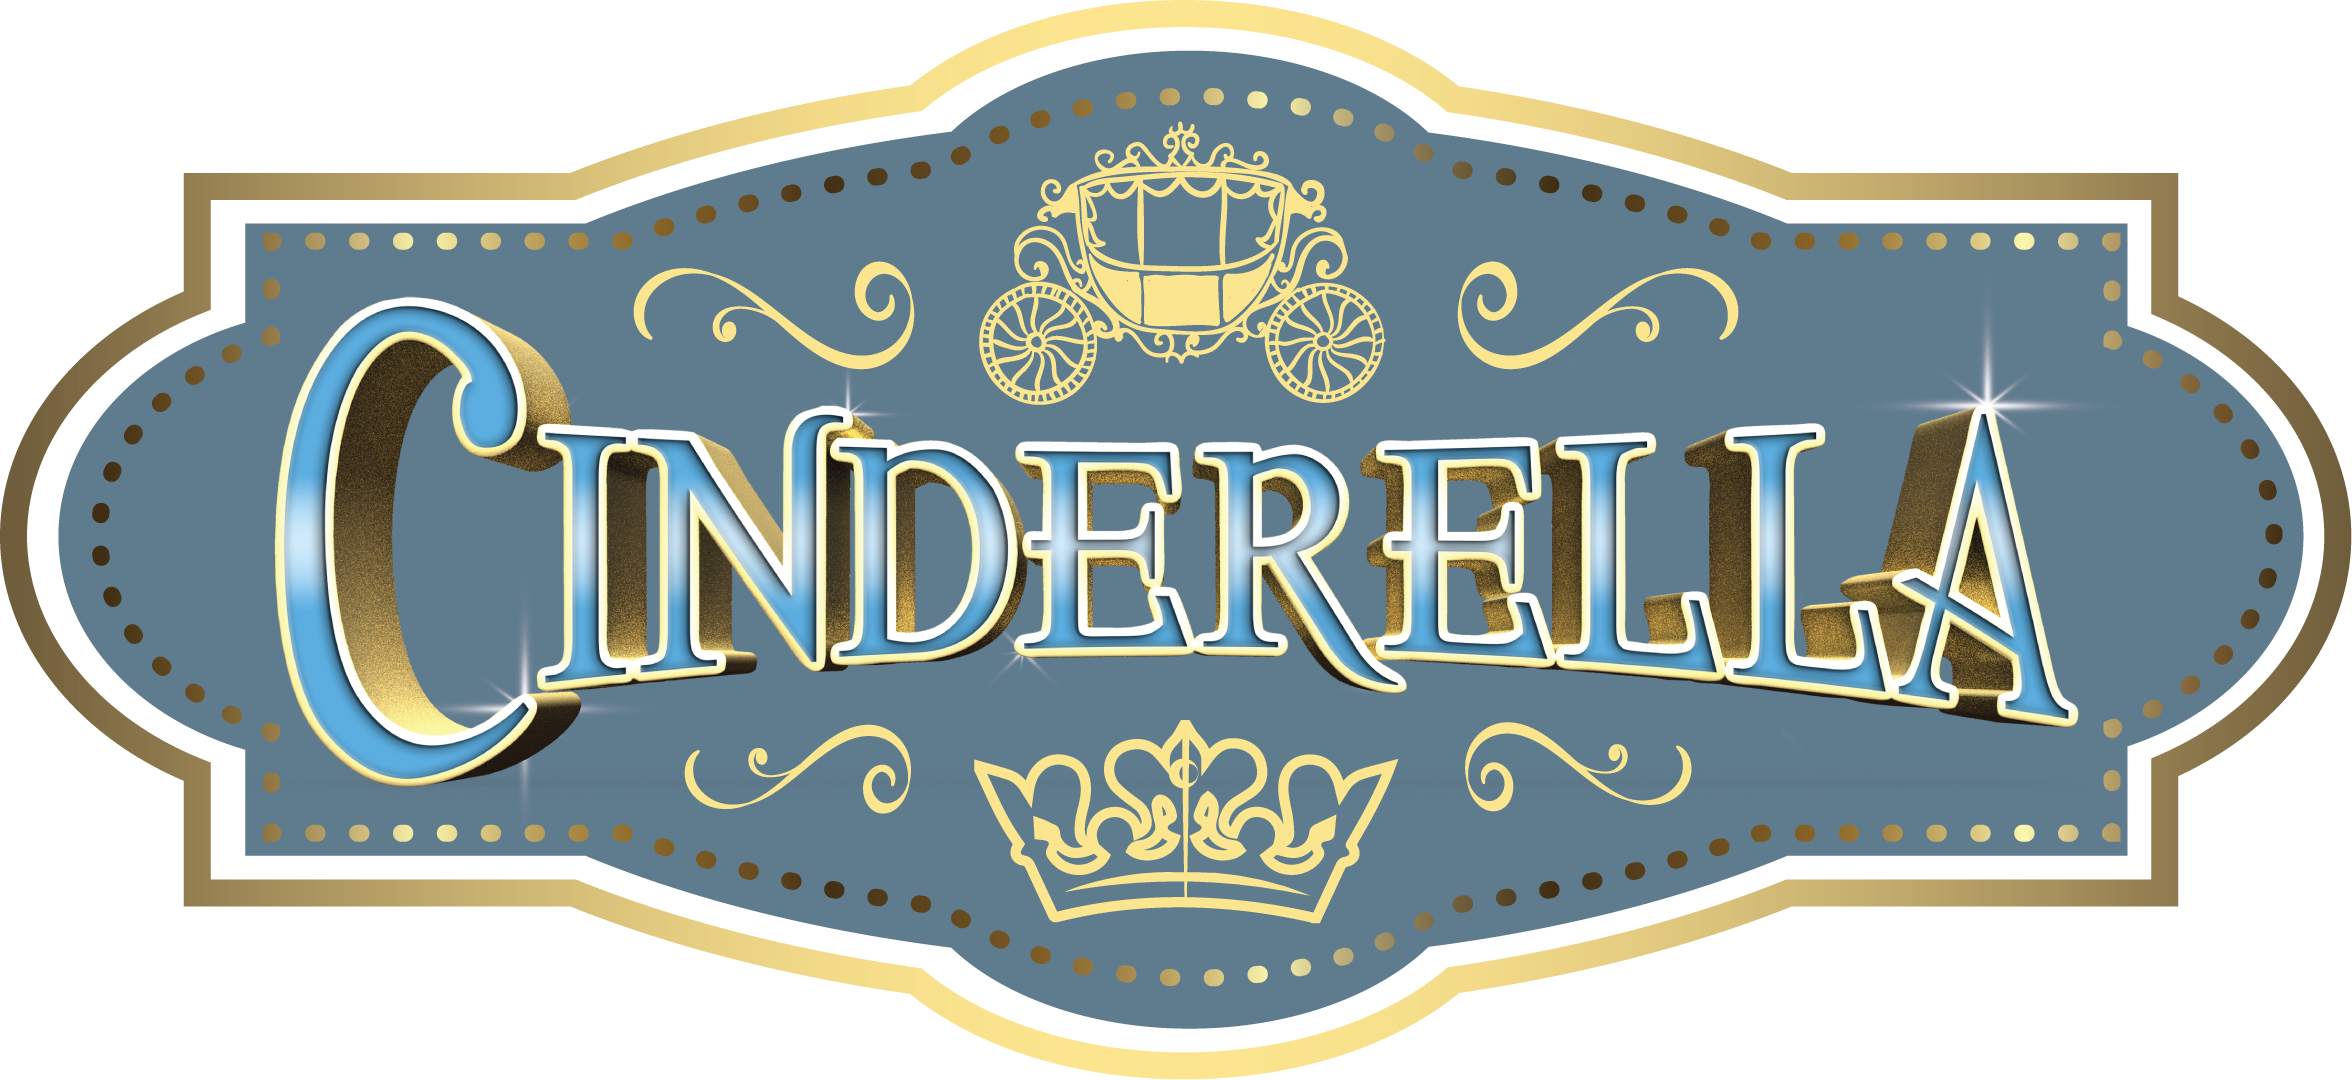 Cinderella PNG HD